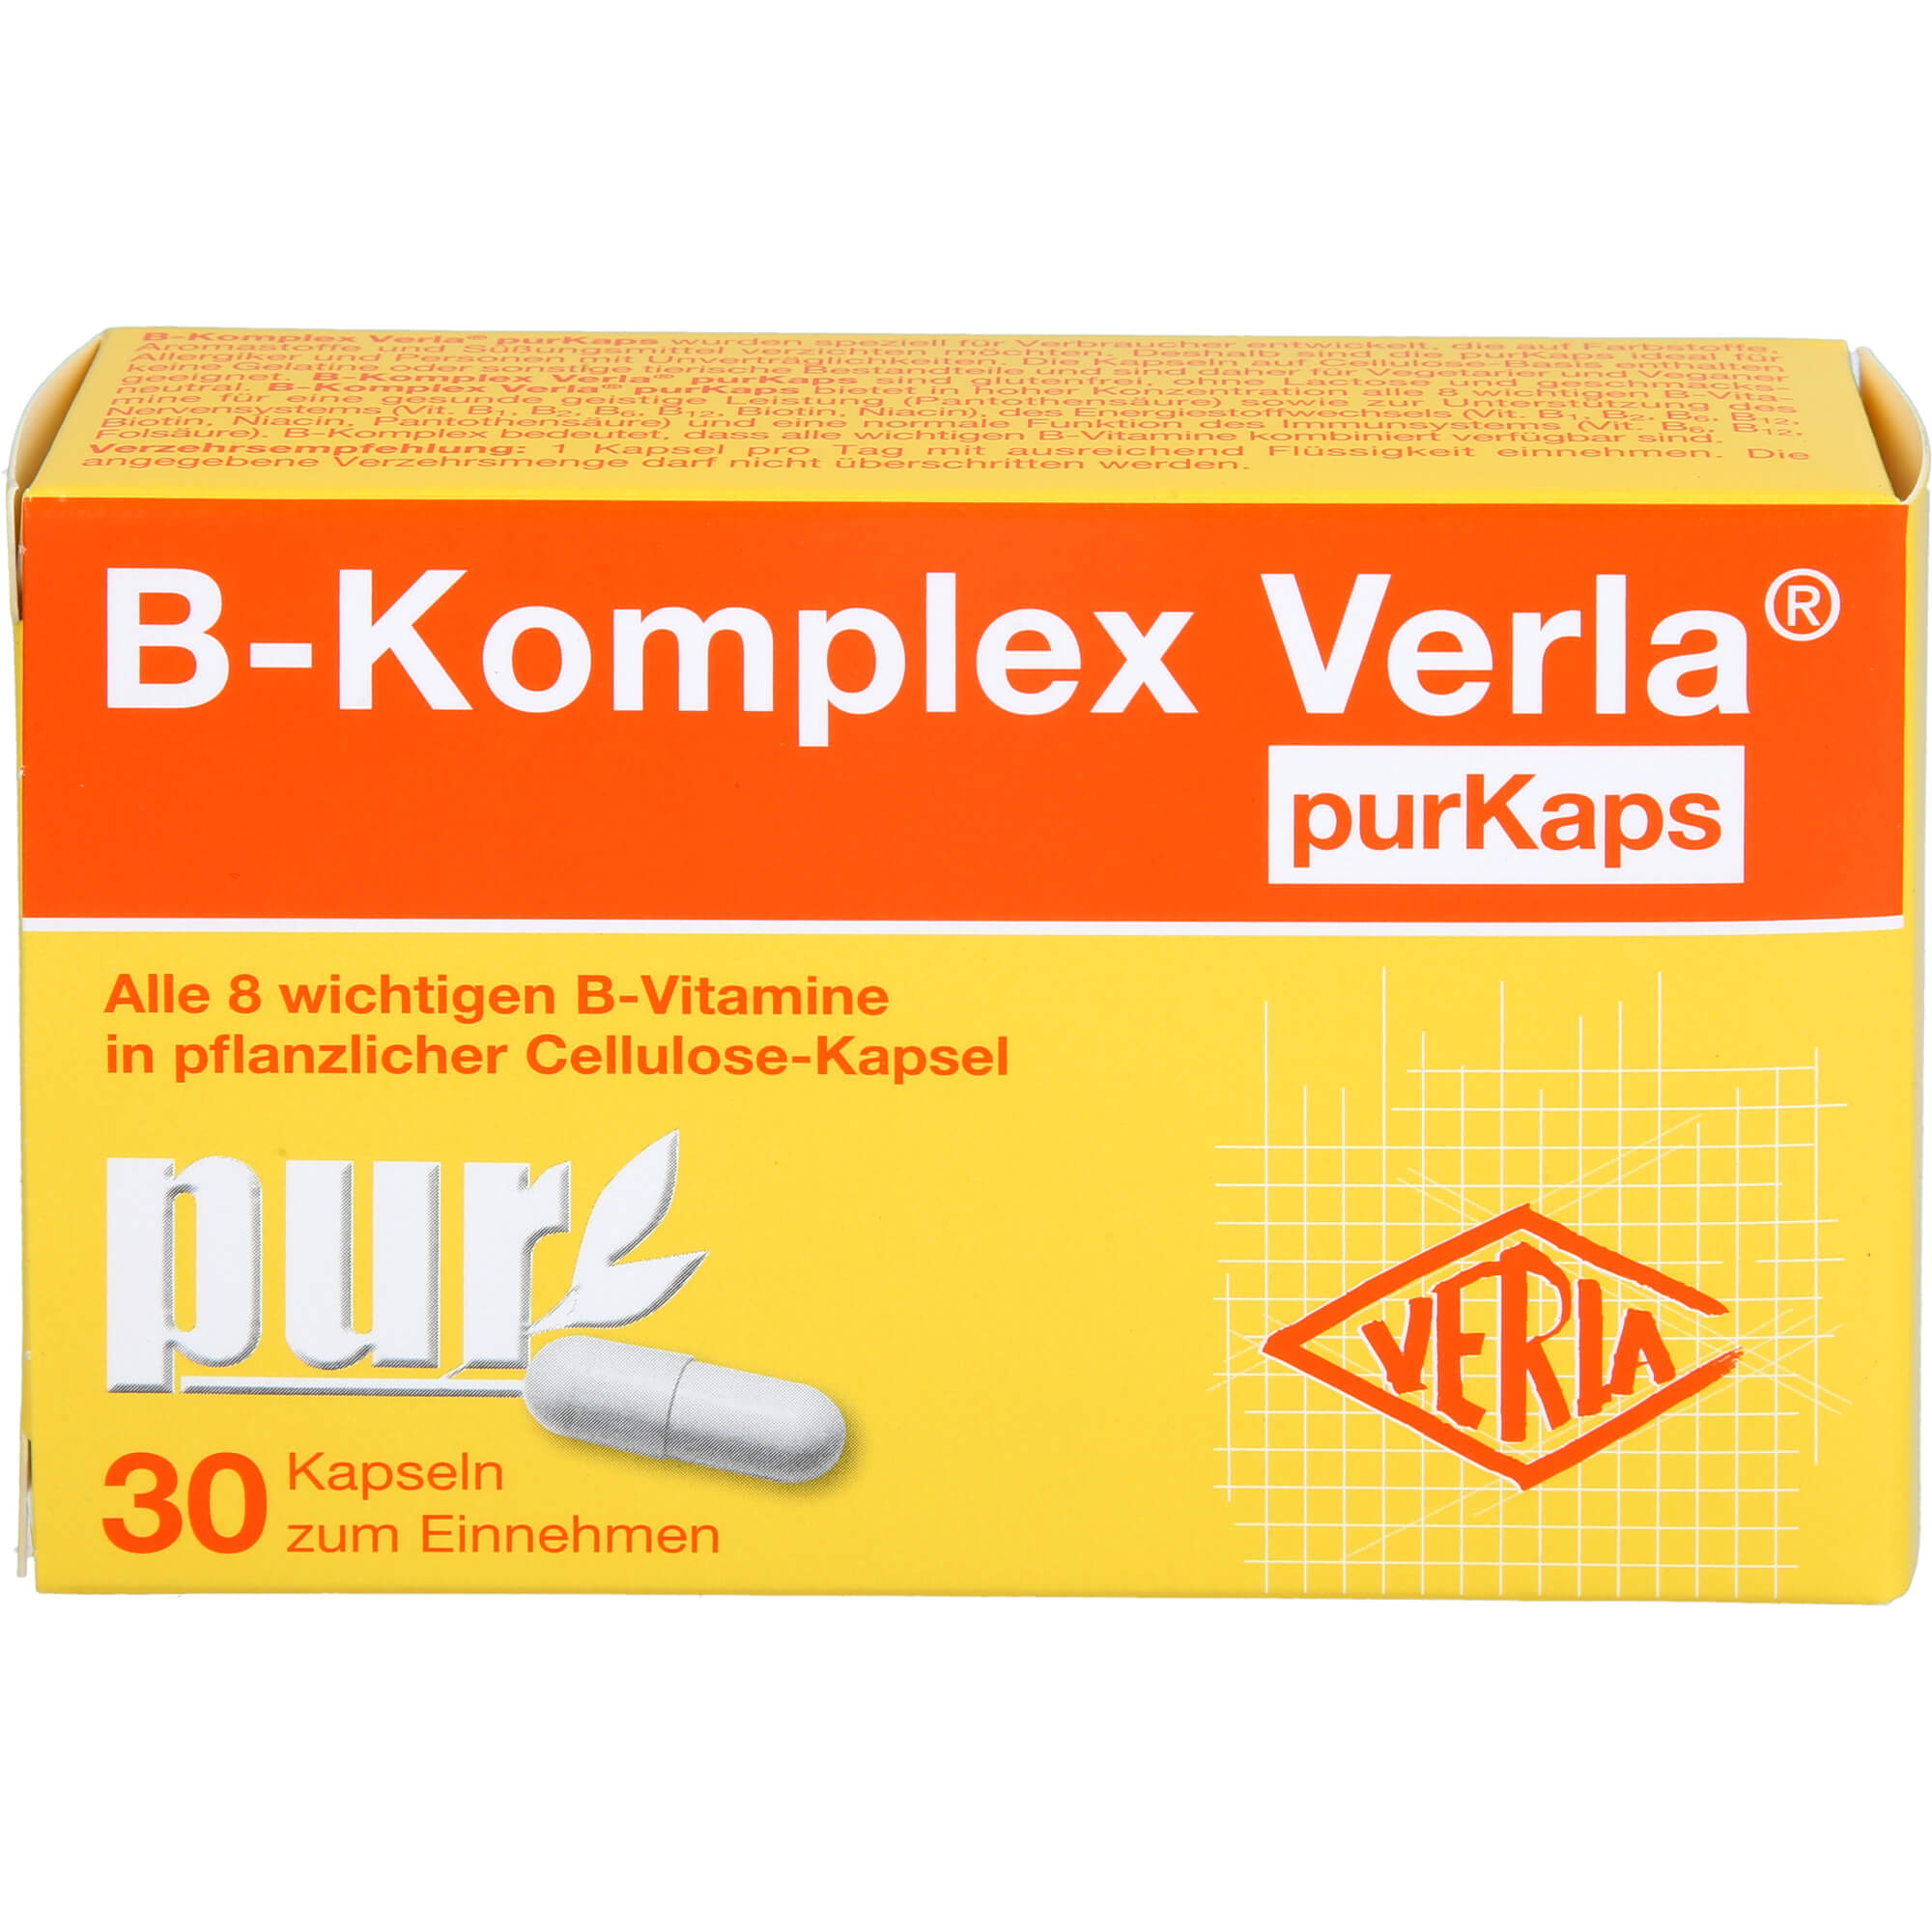 B-KOMPLEX Verla purKaps